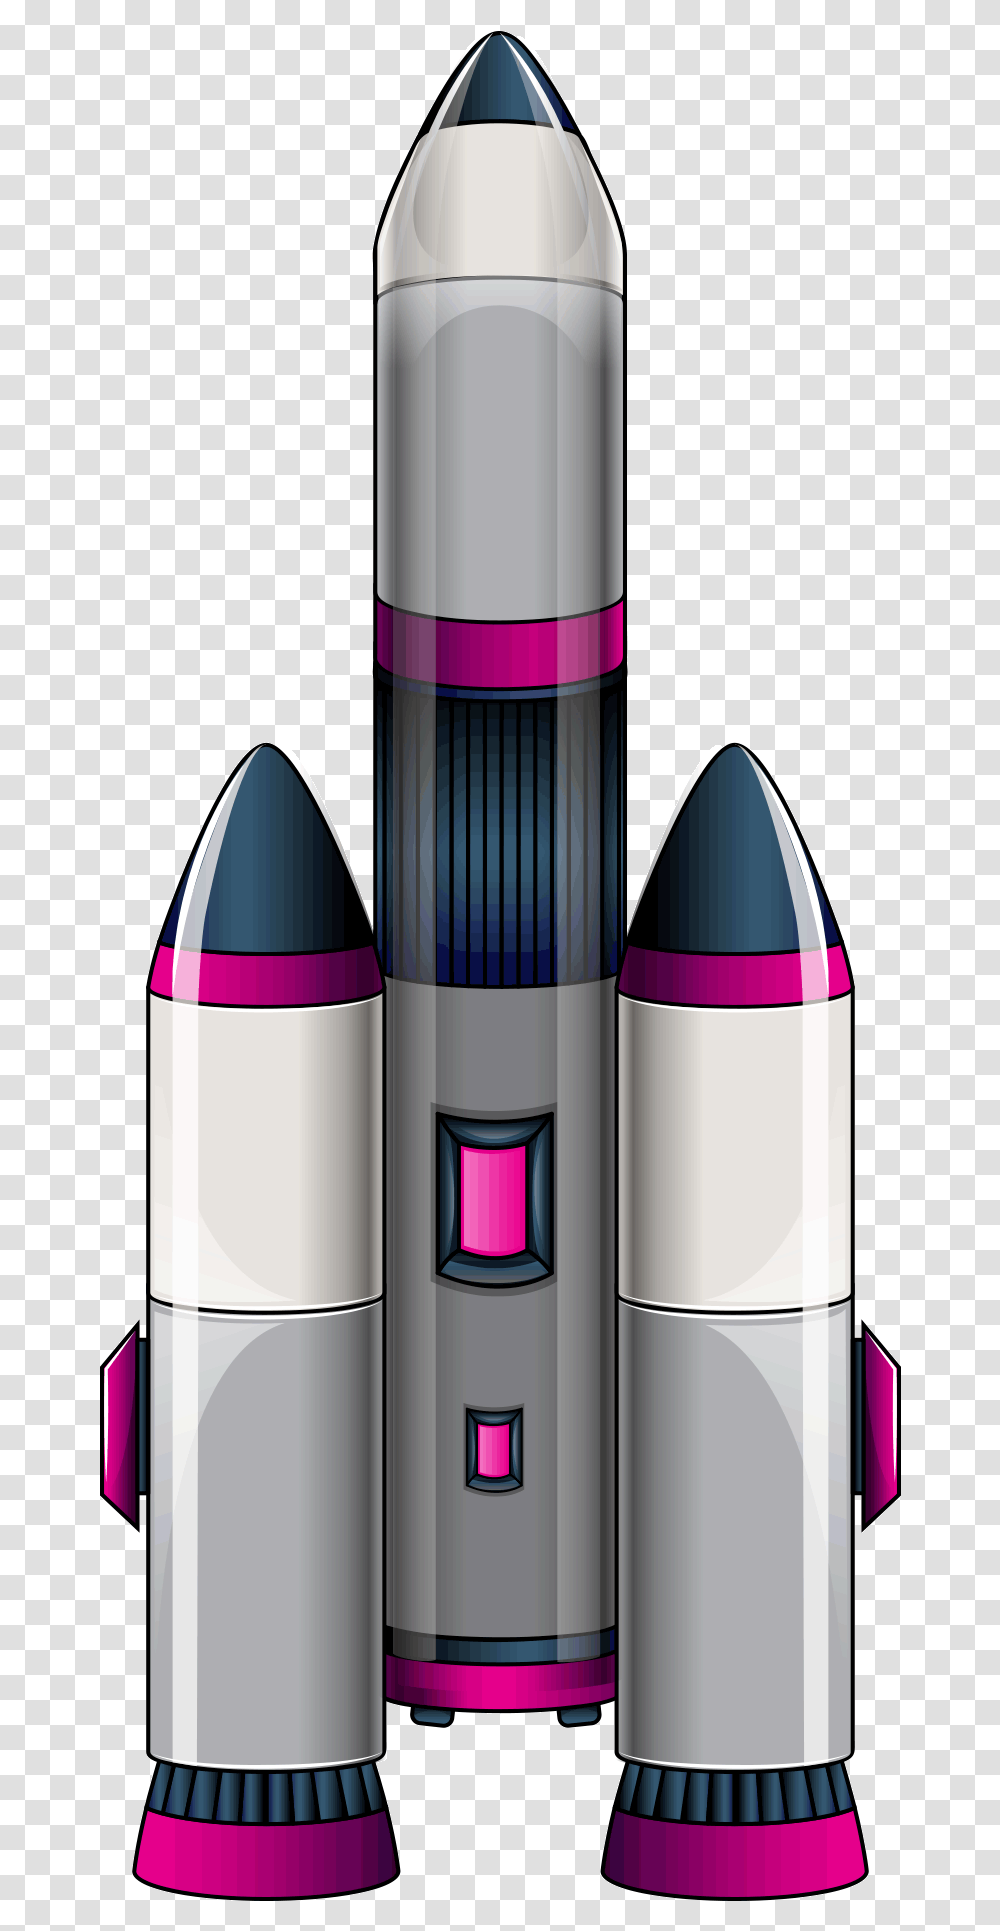 Space Rocket Hd Image Free Download Space Rocket Images Hd, Lipstick, Cosmetics, Home Decor, Ammunition Transparent Png